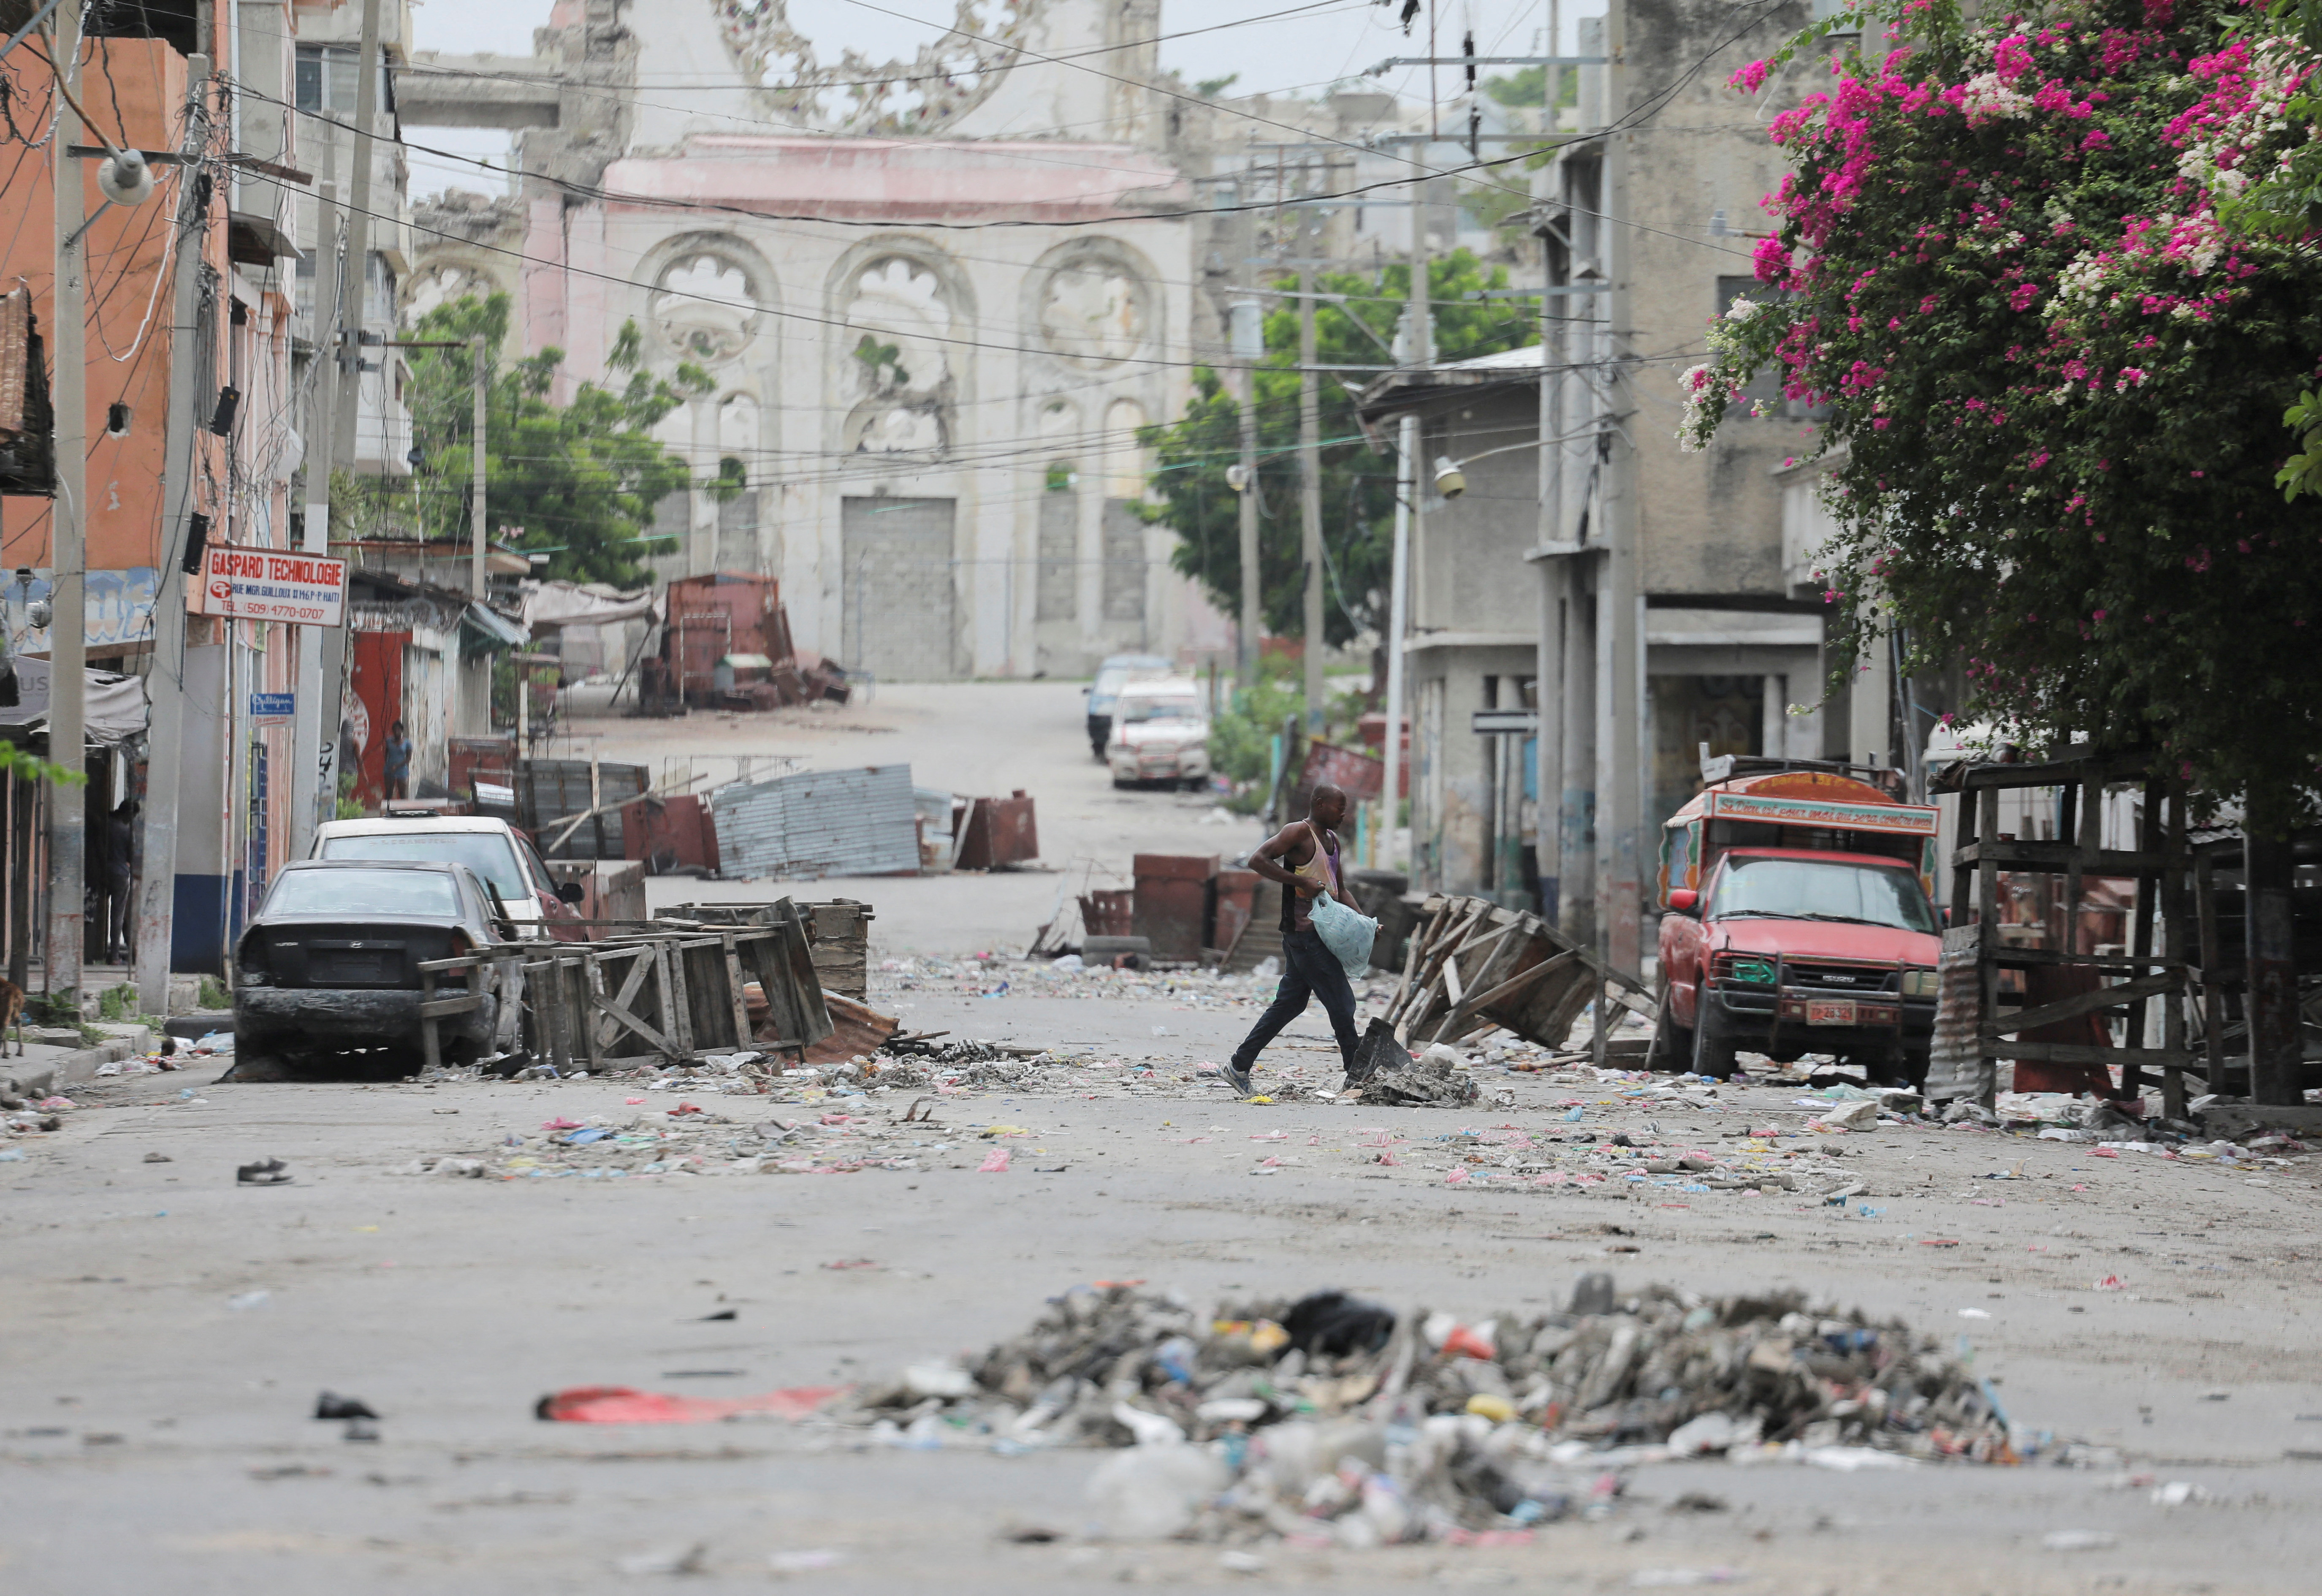 Haiti gangs wage battles in downtown Port-au-Prince